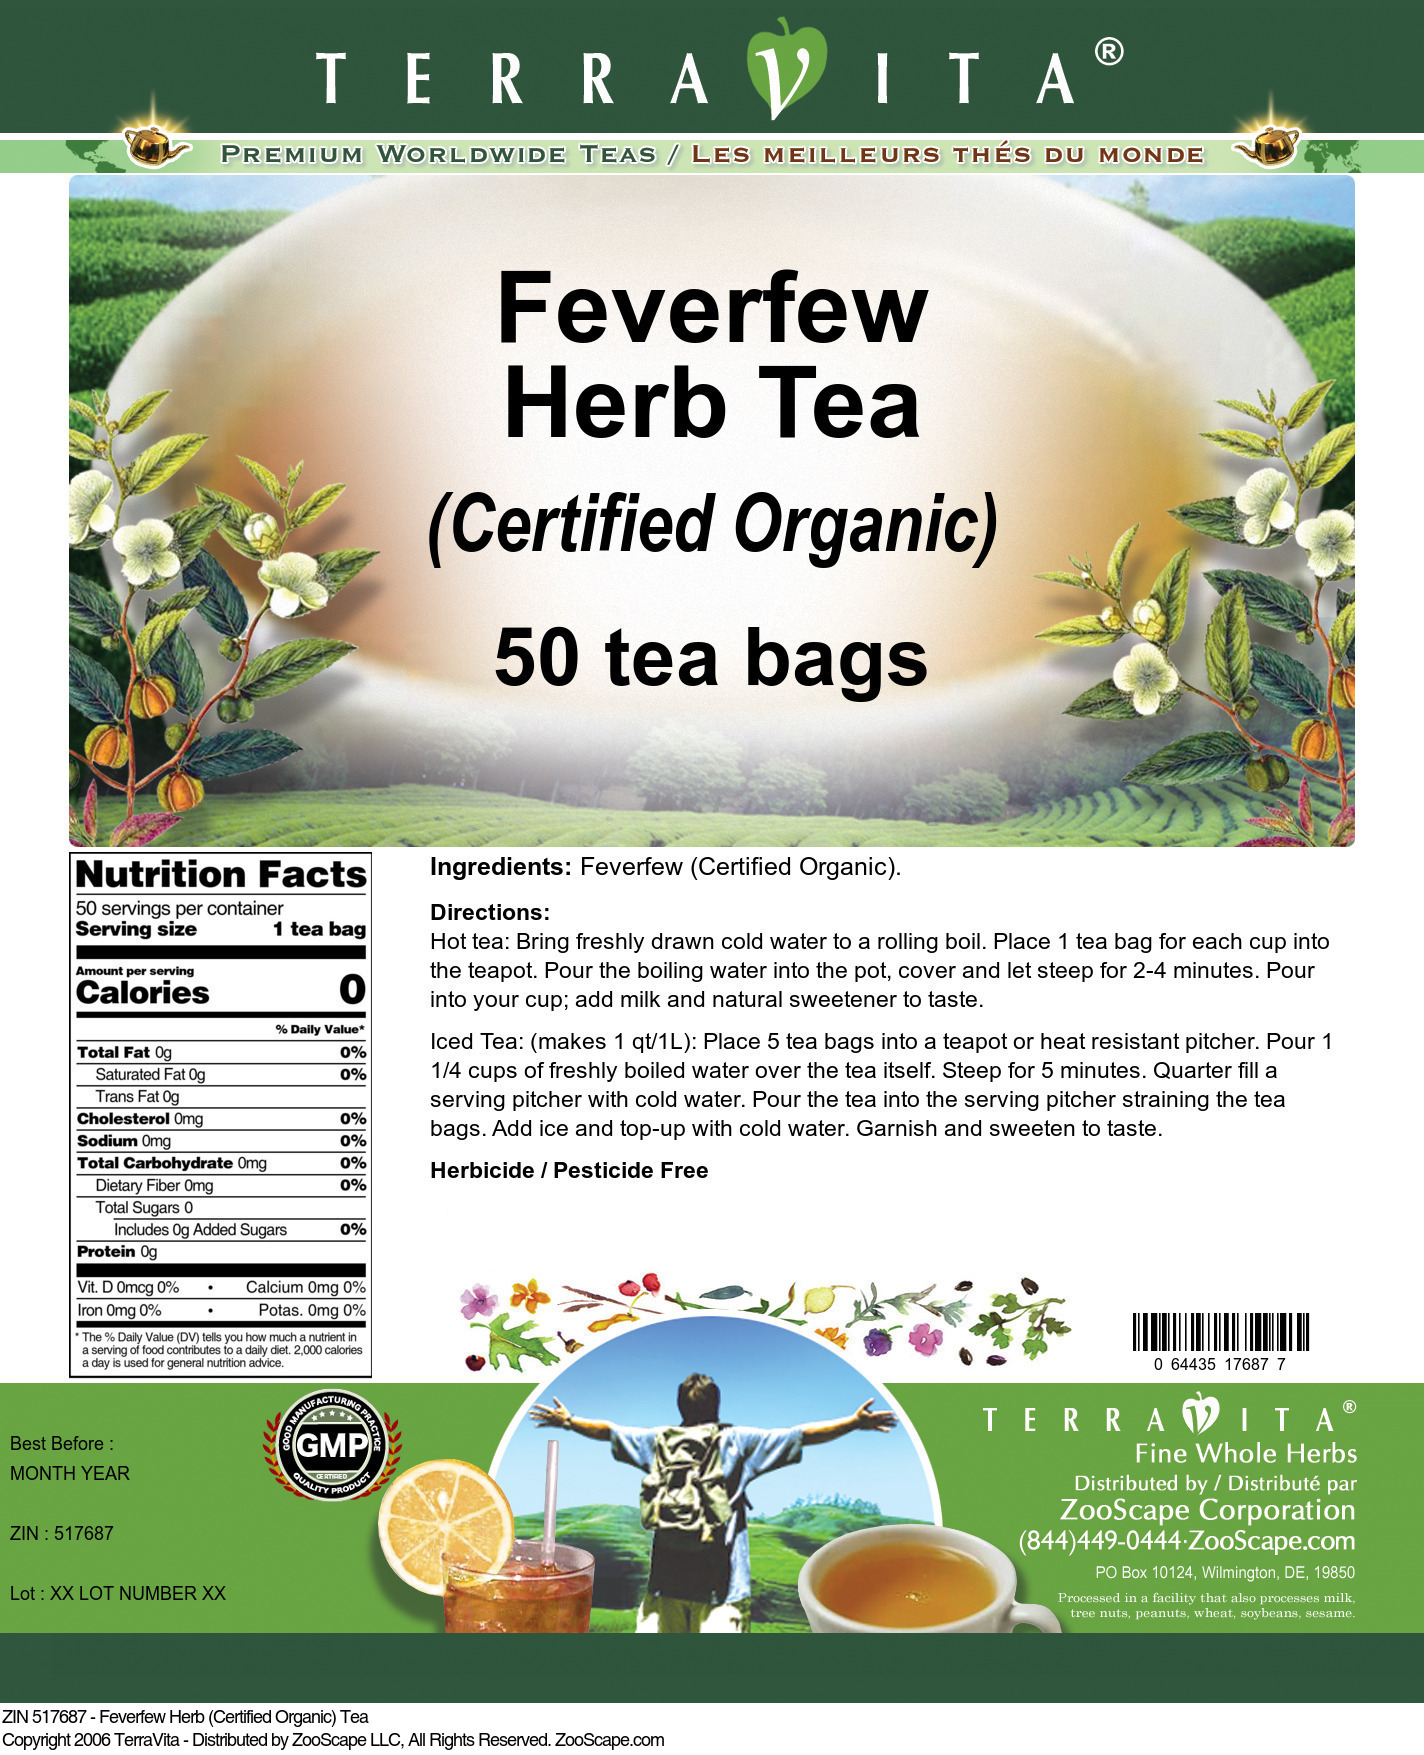 Feverfew Herb (Certified Organic) Tea - Label